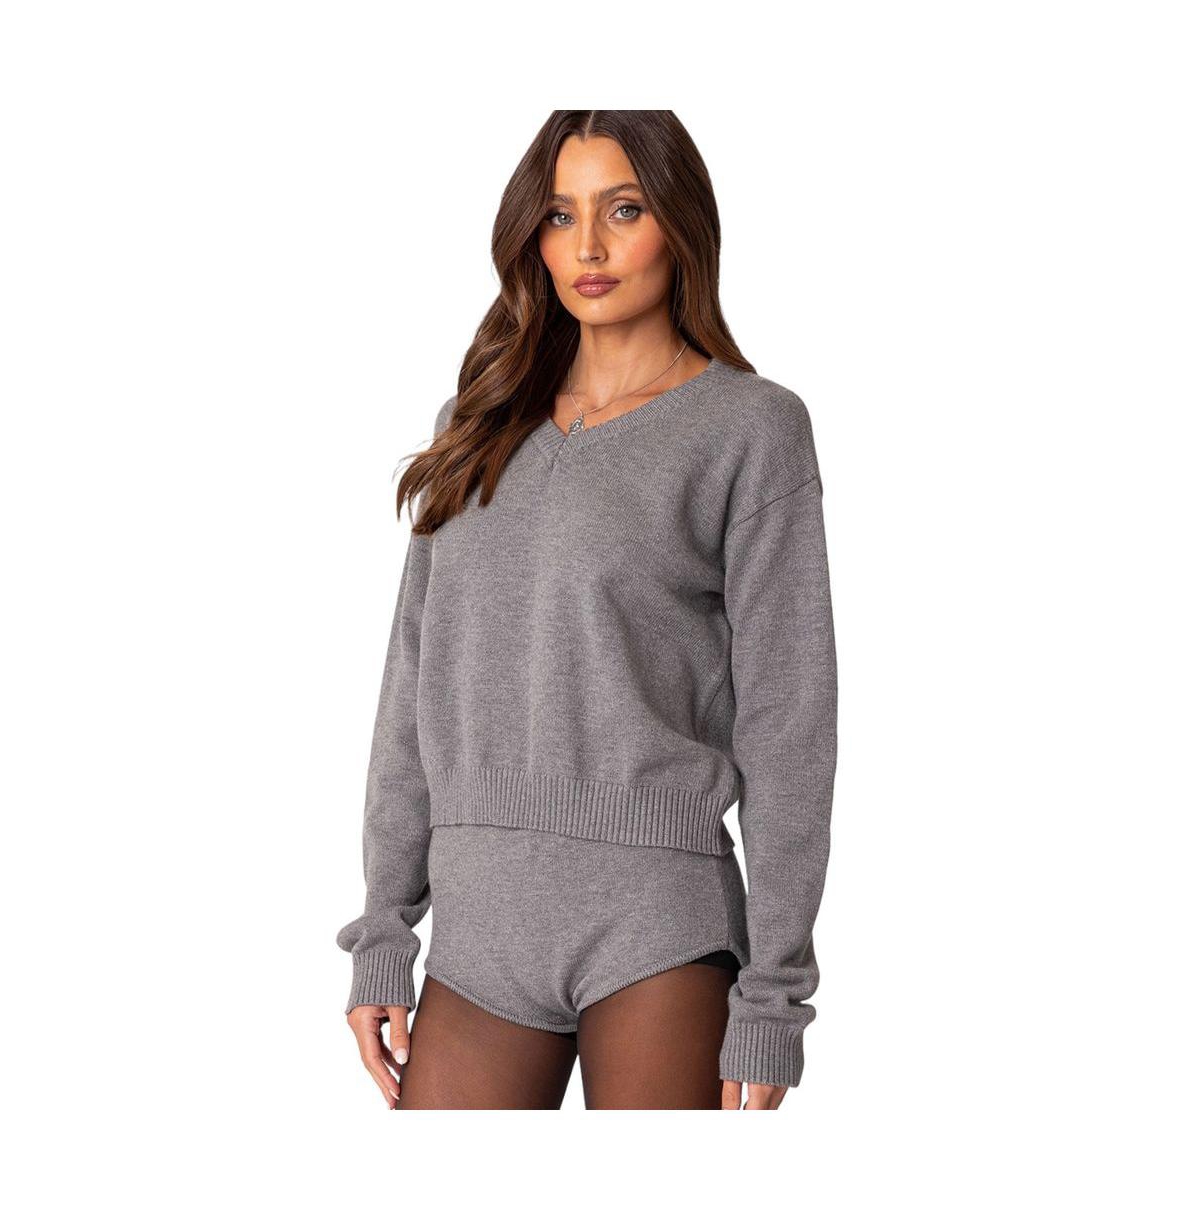 Women's Comfort club oversized sweater - Gray-melange